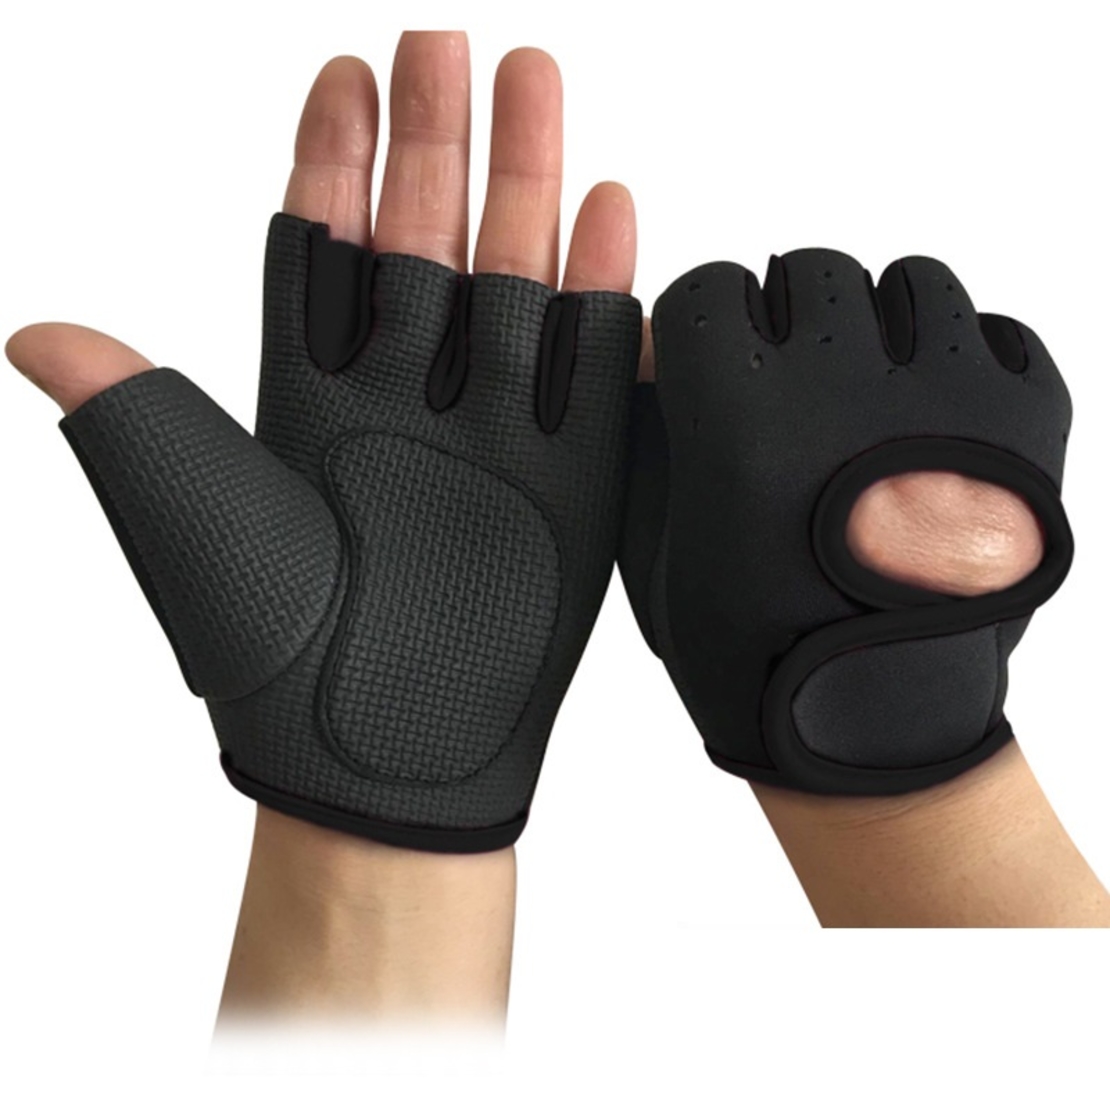 gloves for gym